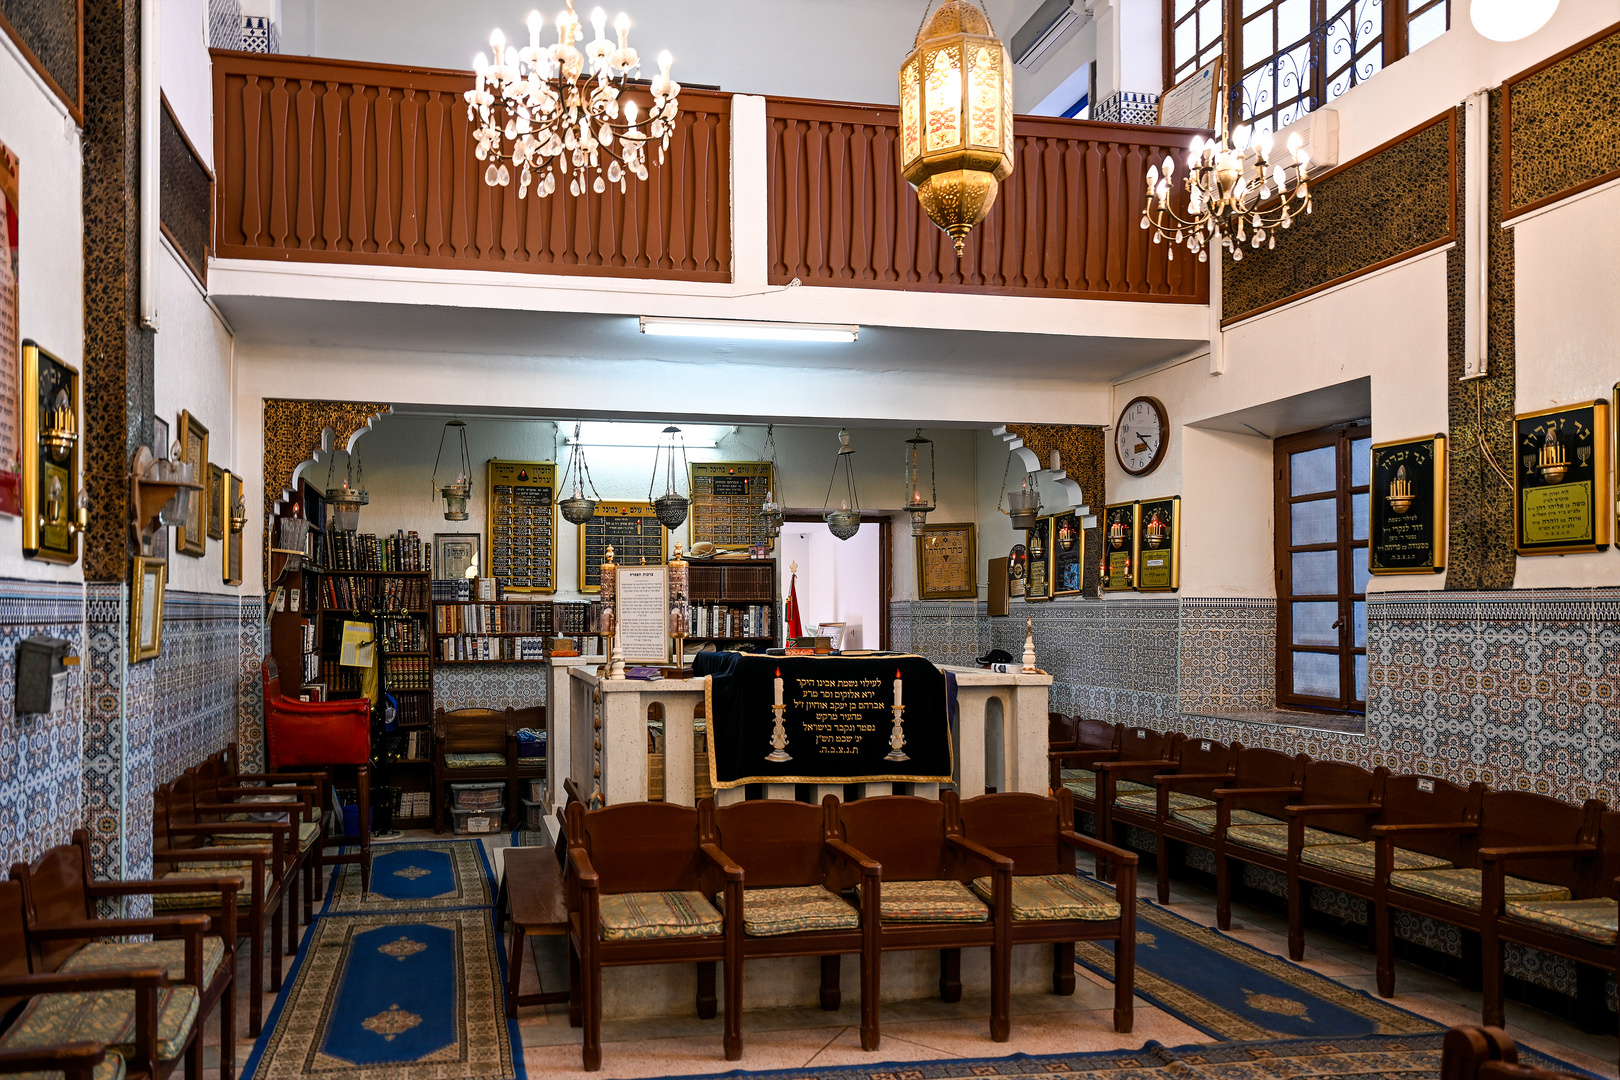 Slat al-Azama Synagoge 02